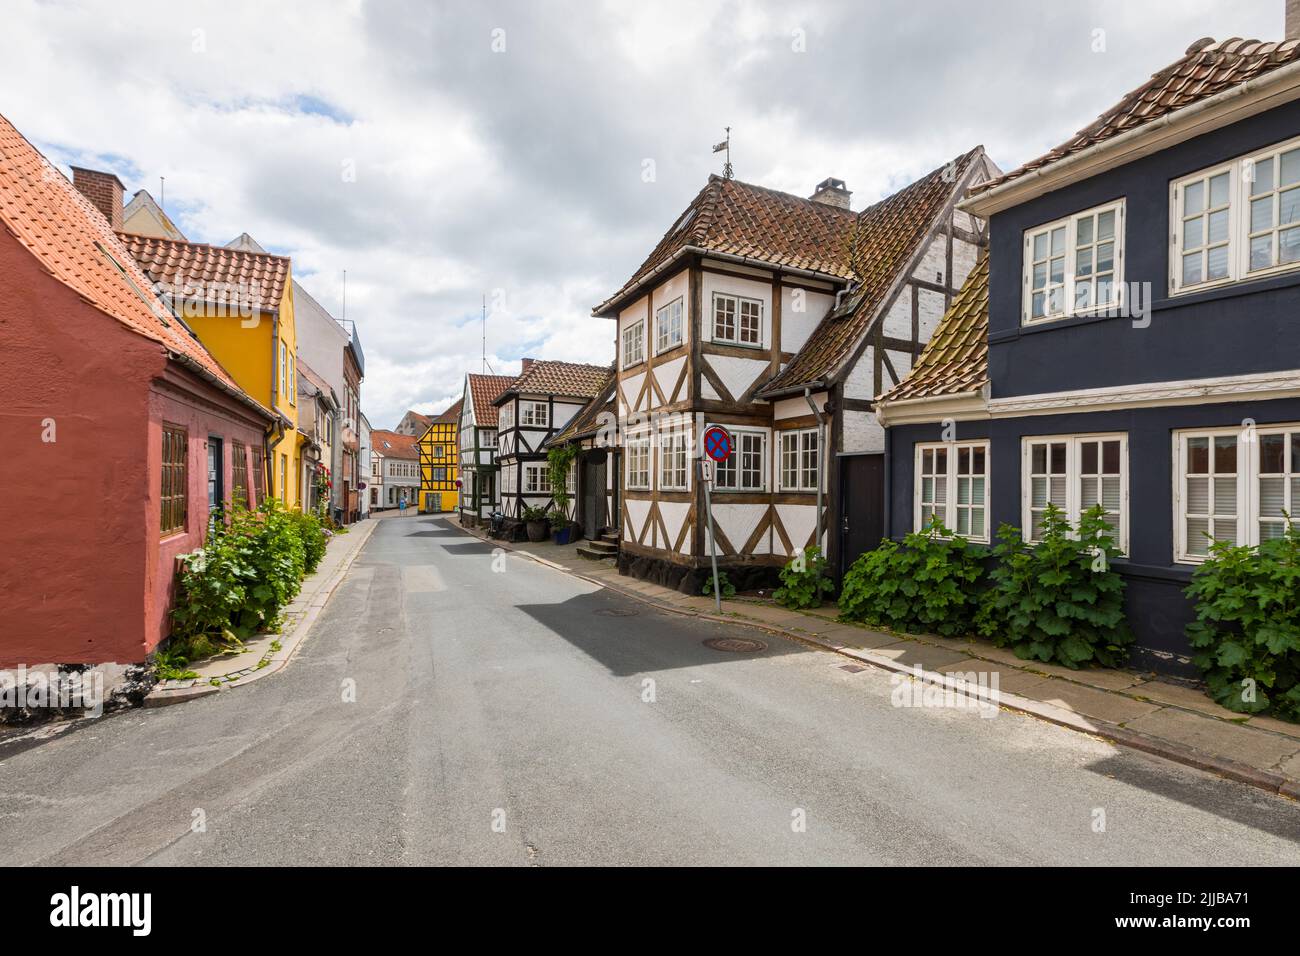 Calle con casas de entramado de madera en el casco antiguo histórico de Svendborg, Funen, Dinamarca Foto de stock